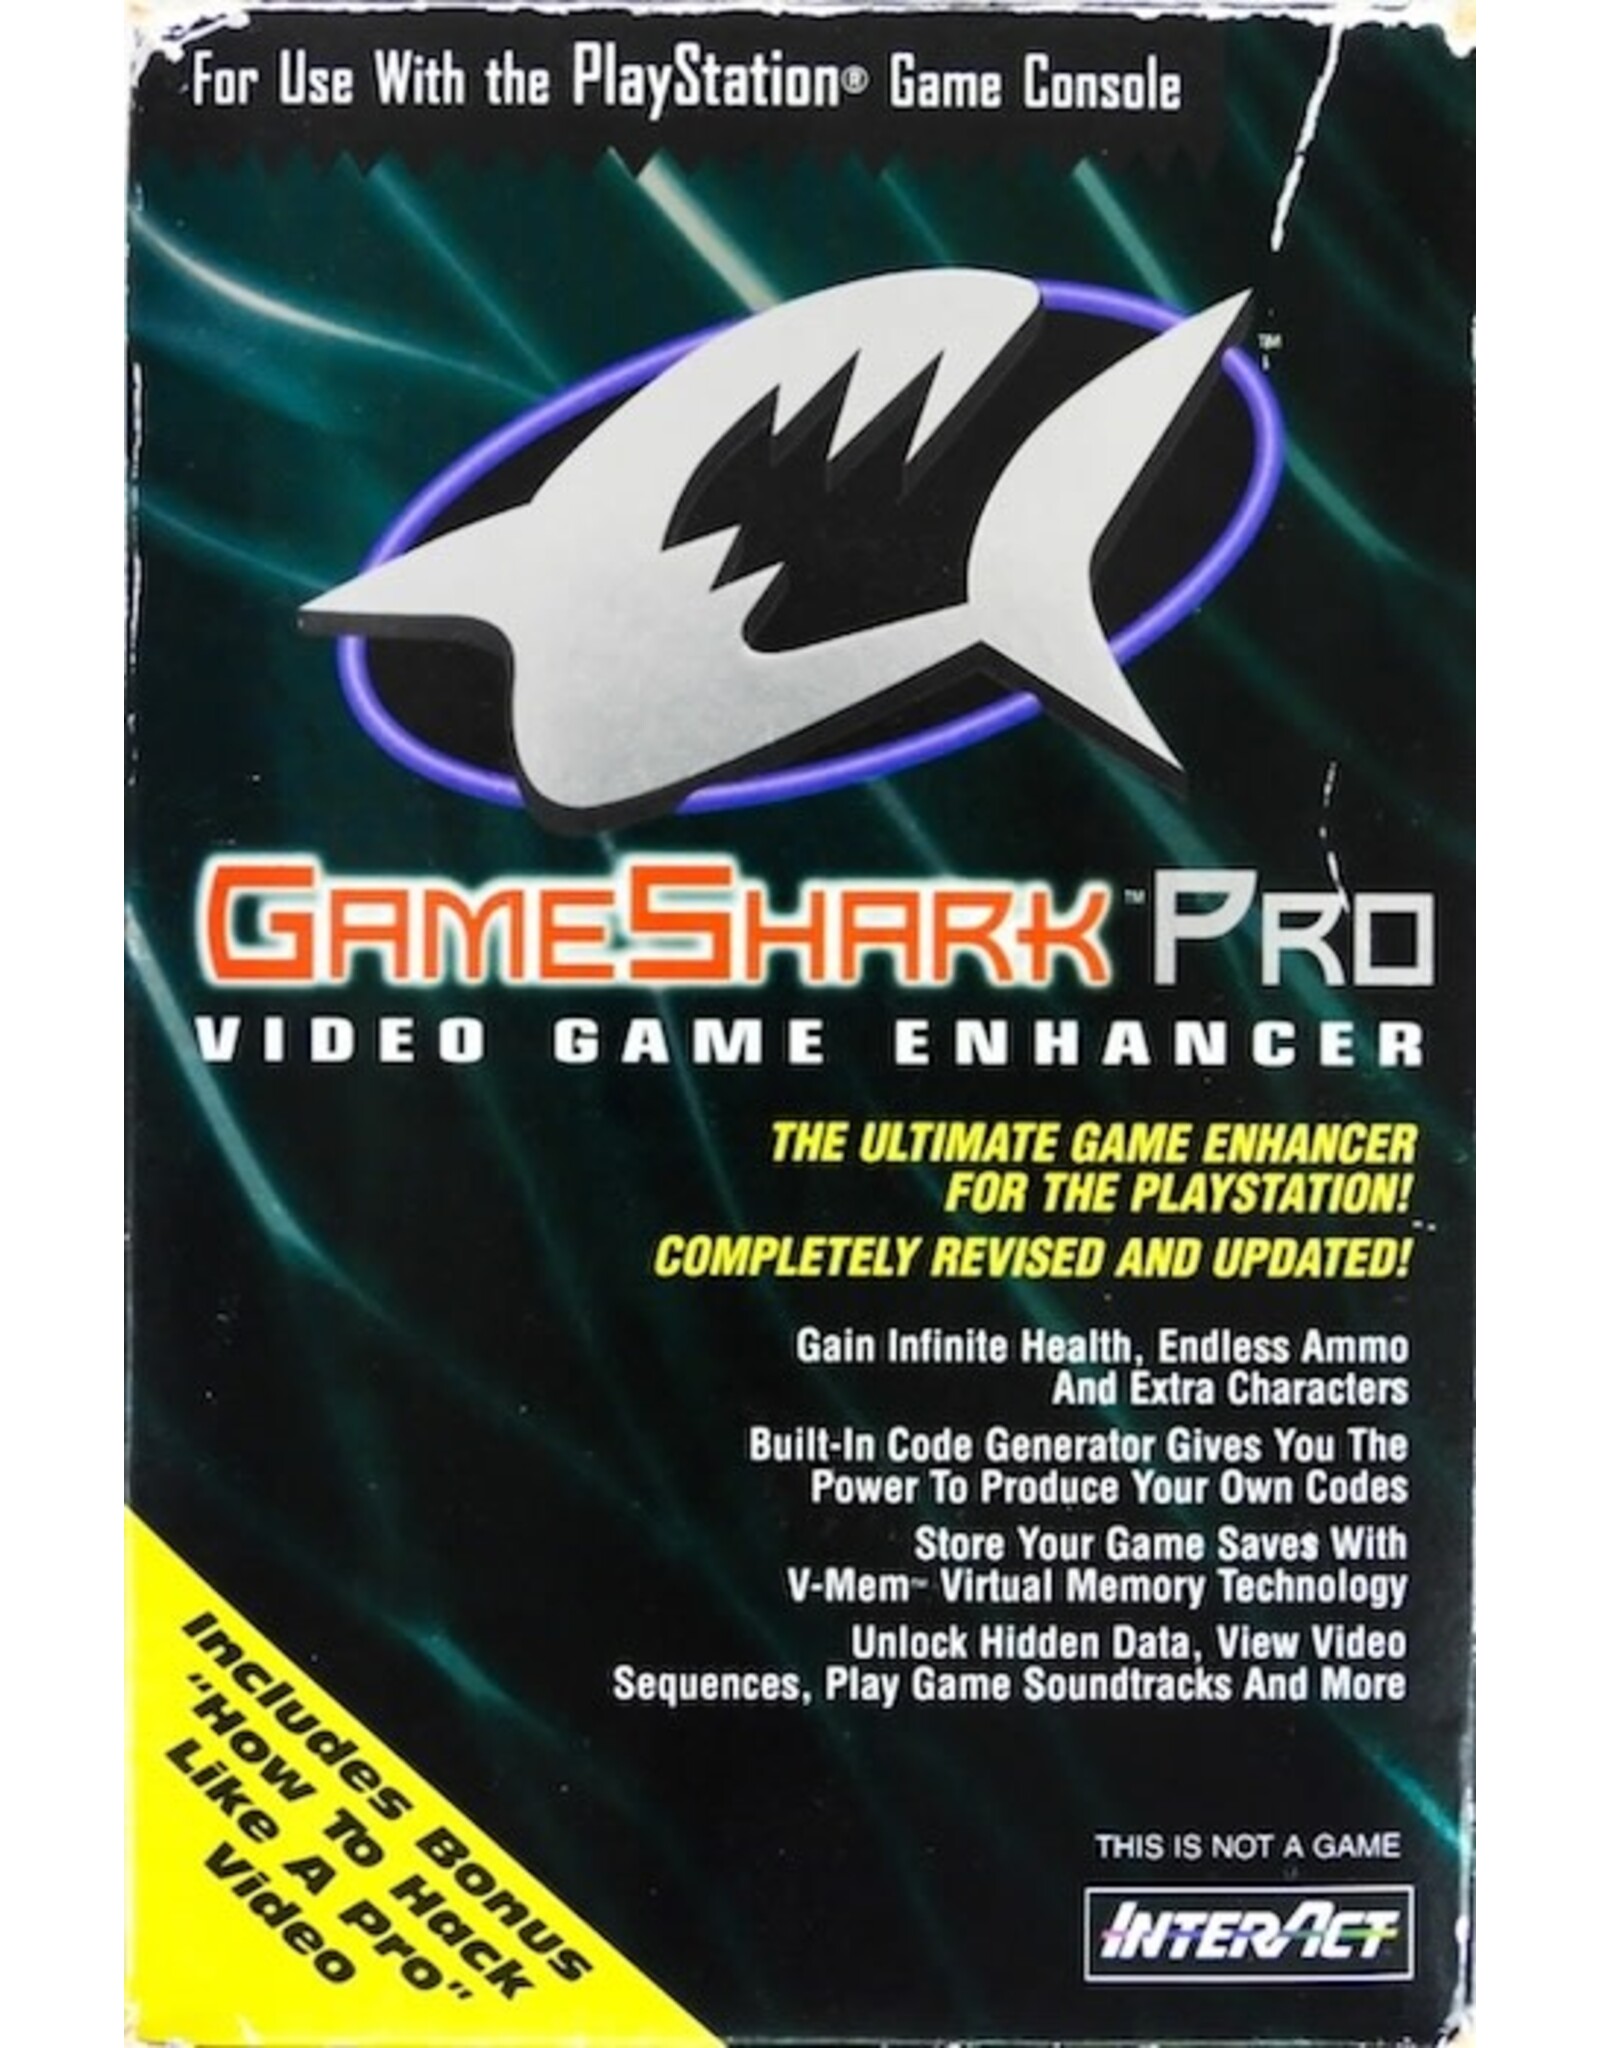 Playstation Gameshark Pro v3.2 (Requires Serial Port)